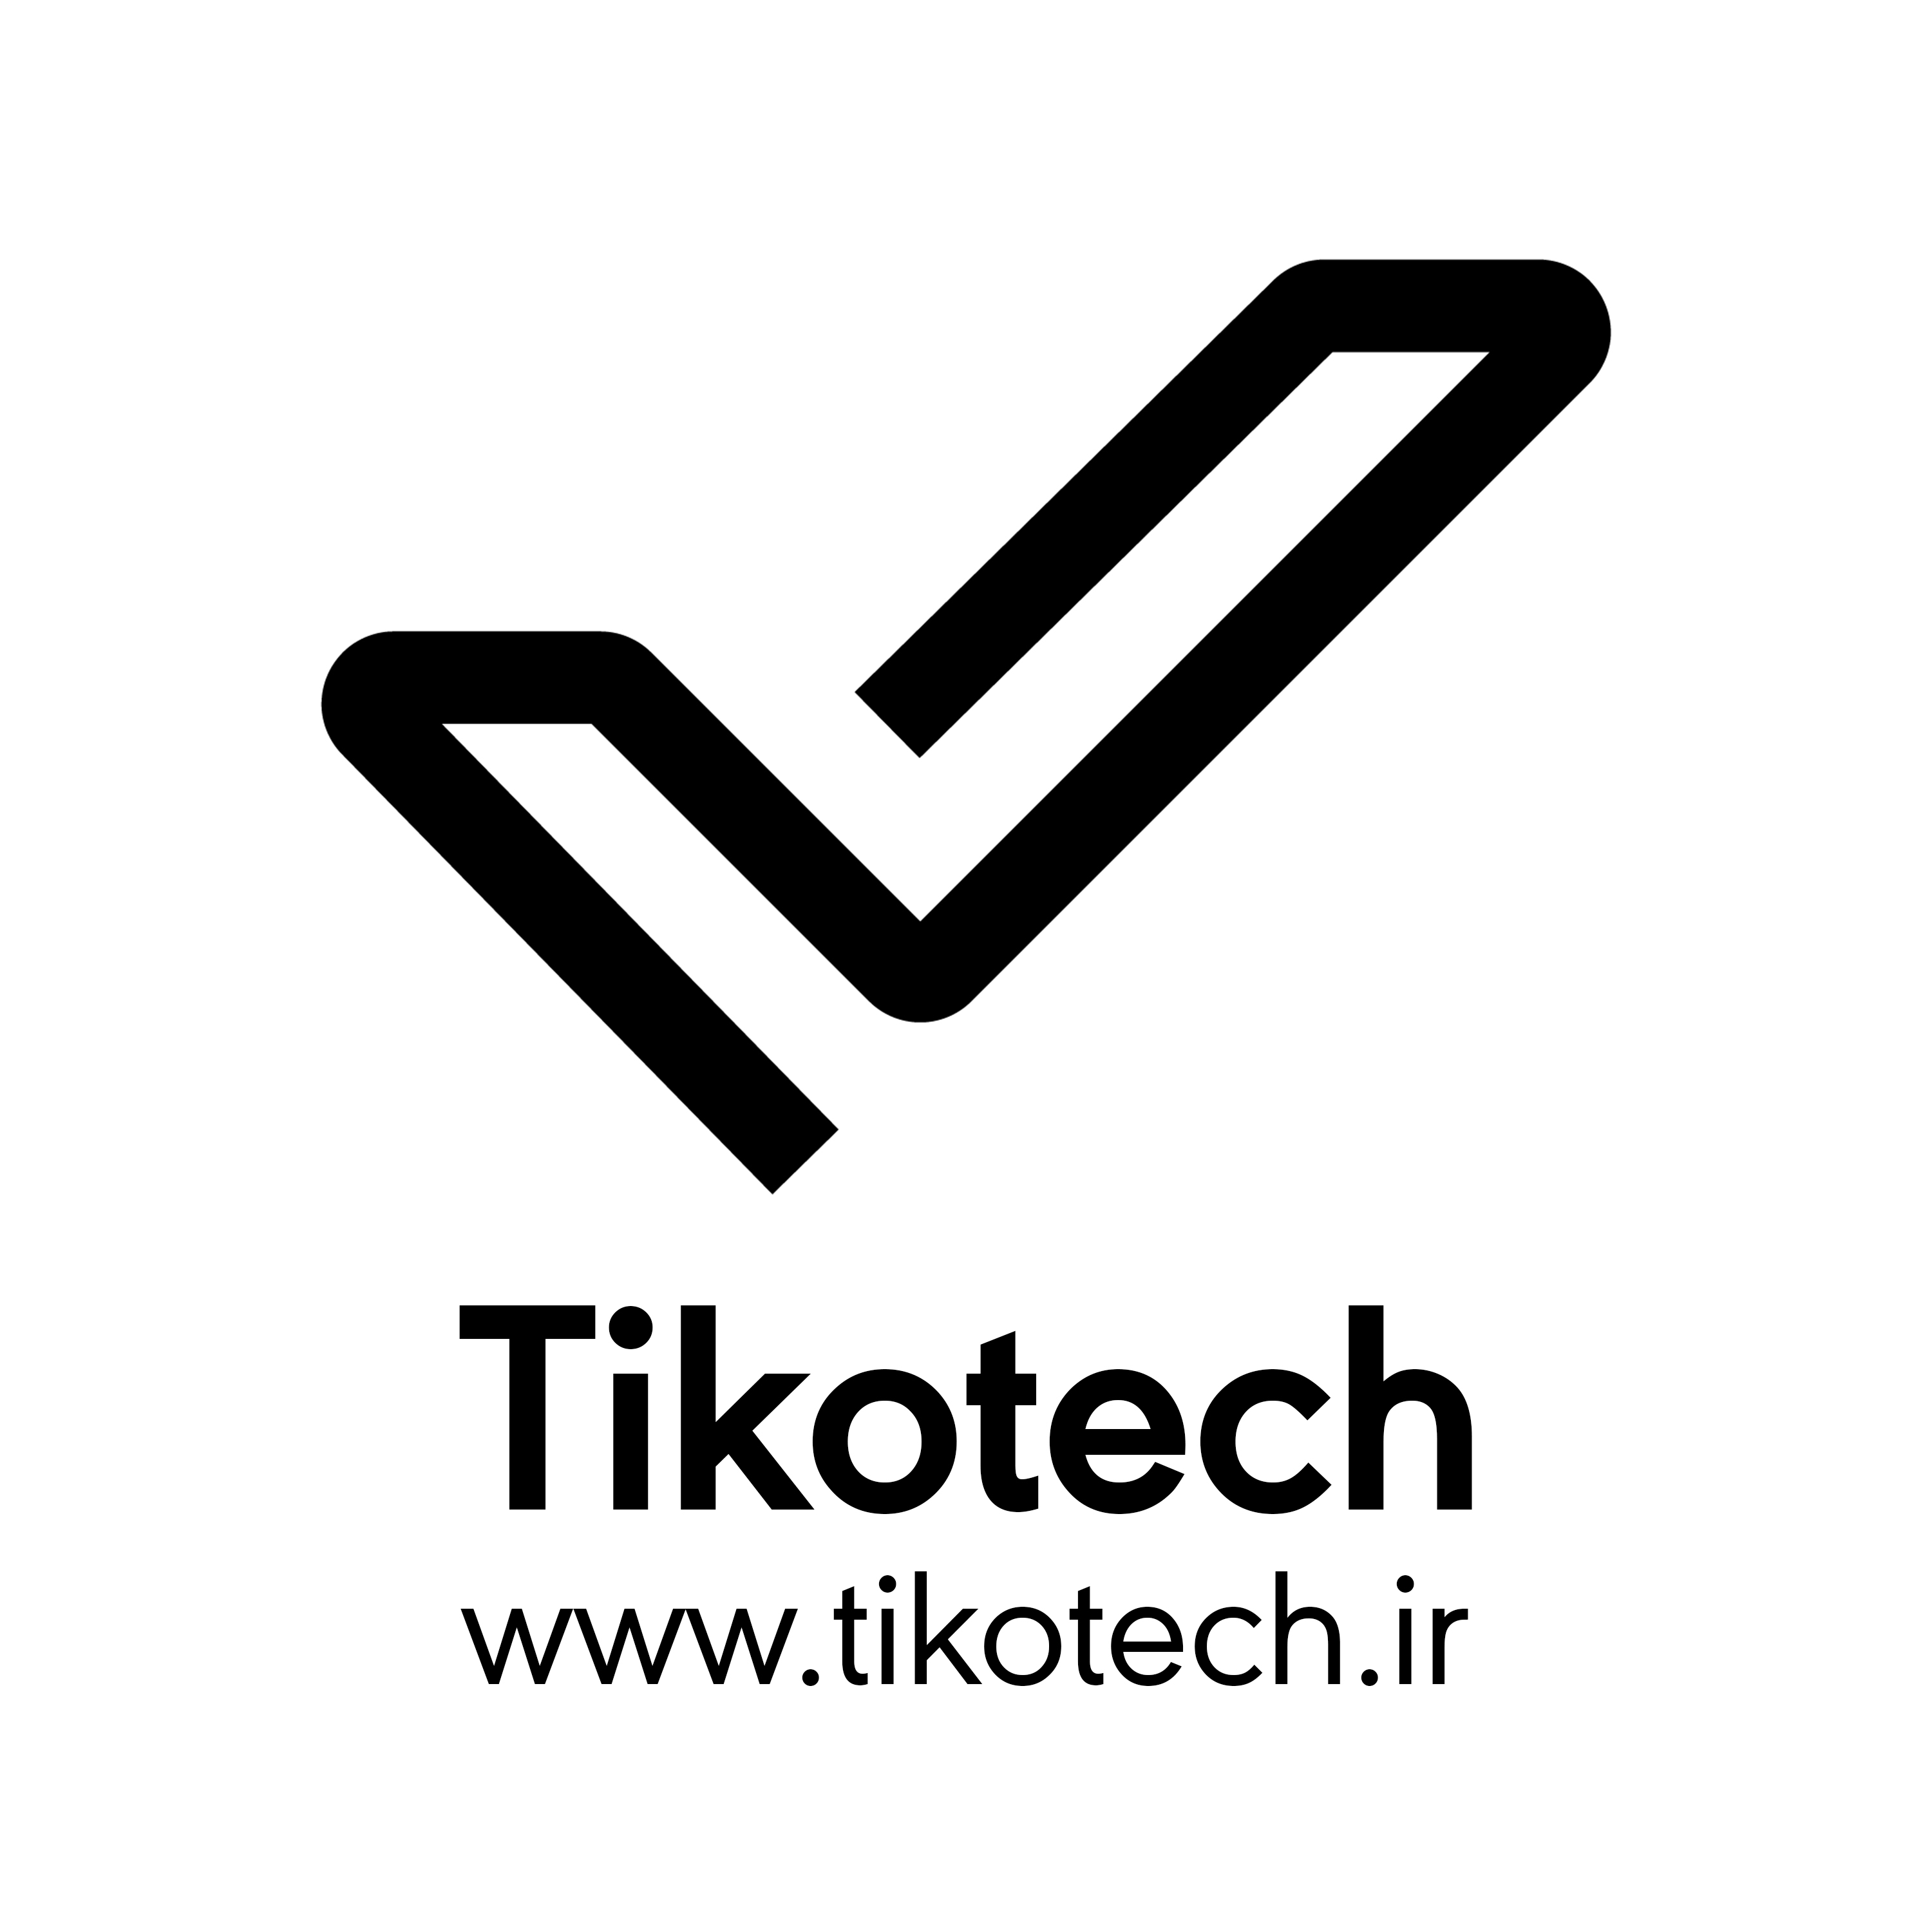 www.tikotech.ir